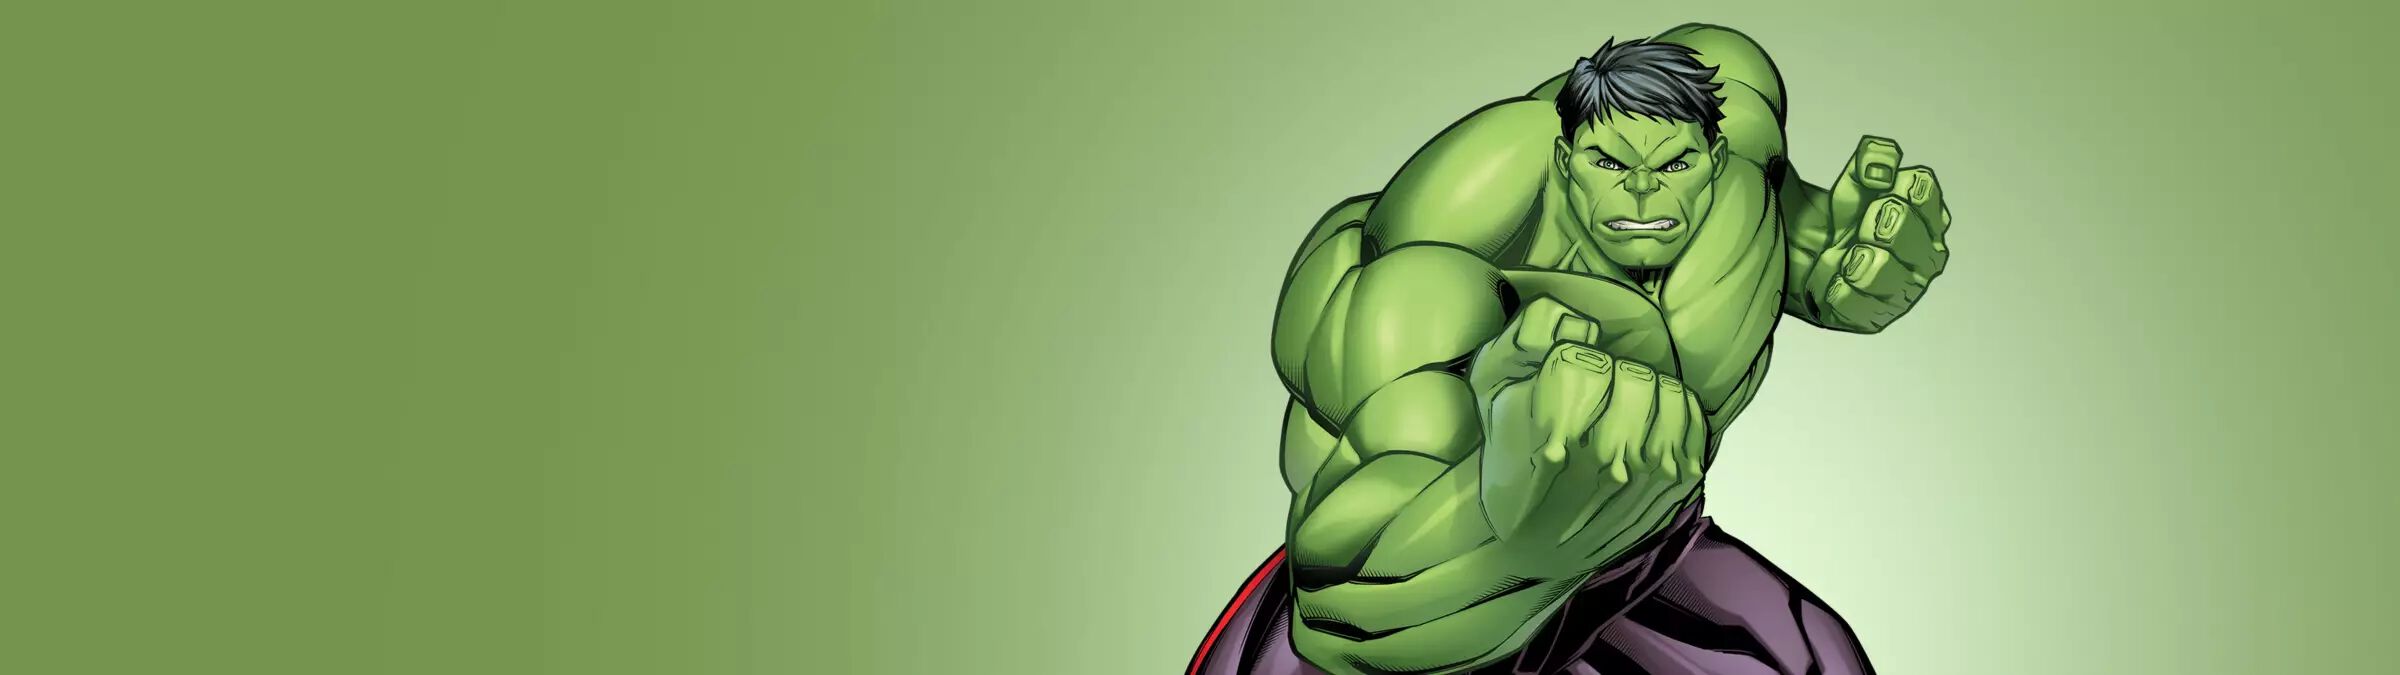 Hulk Character Banner